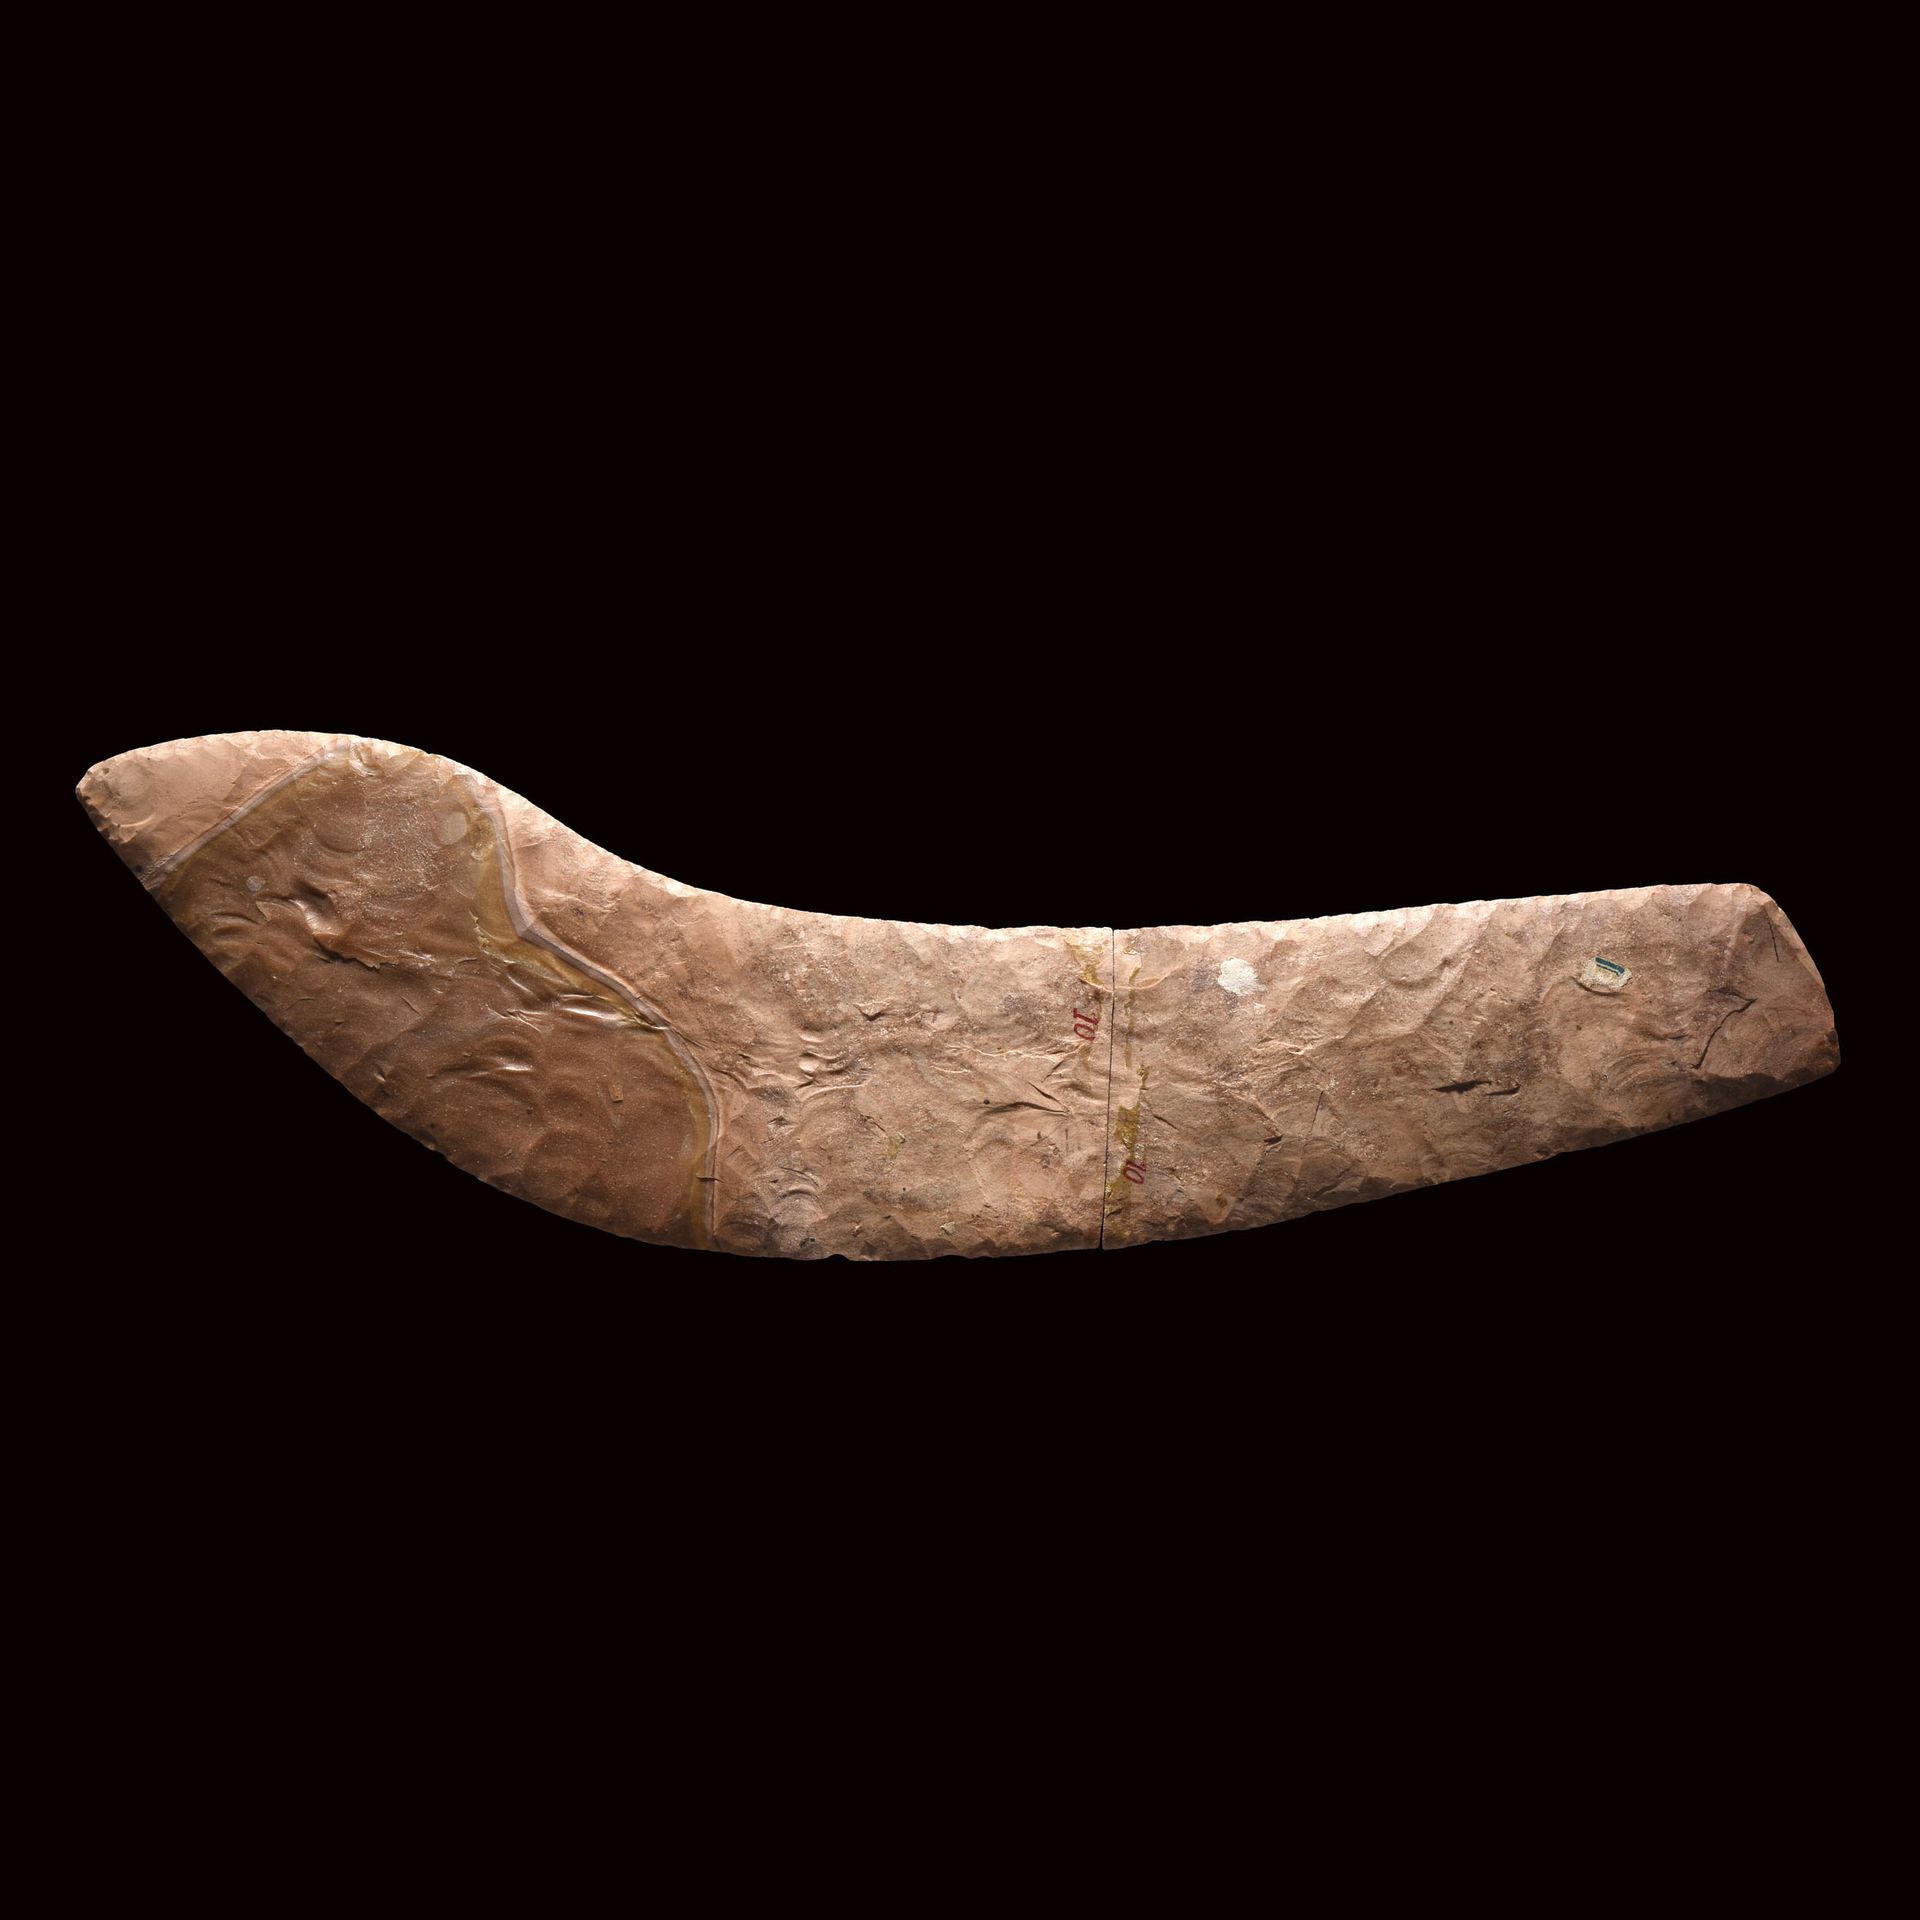 Null LAME DE COUTEAU

Egypte, Naqada III, c. 3200-3000 av. J.-C. 

Silex. Cassée&hellip;